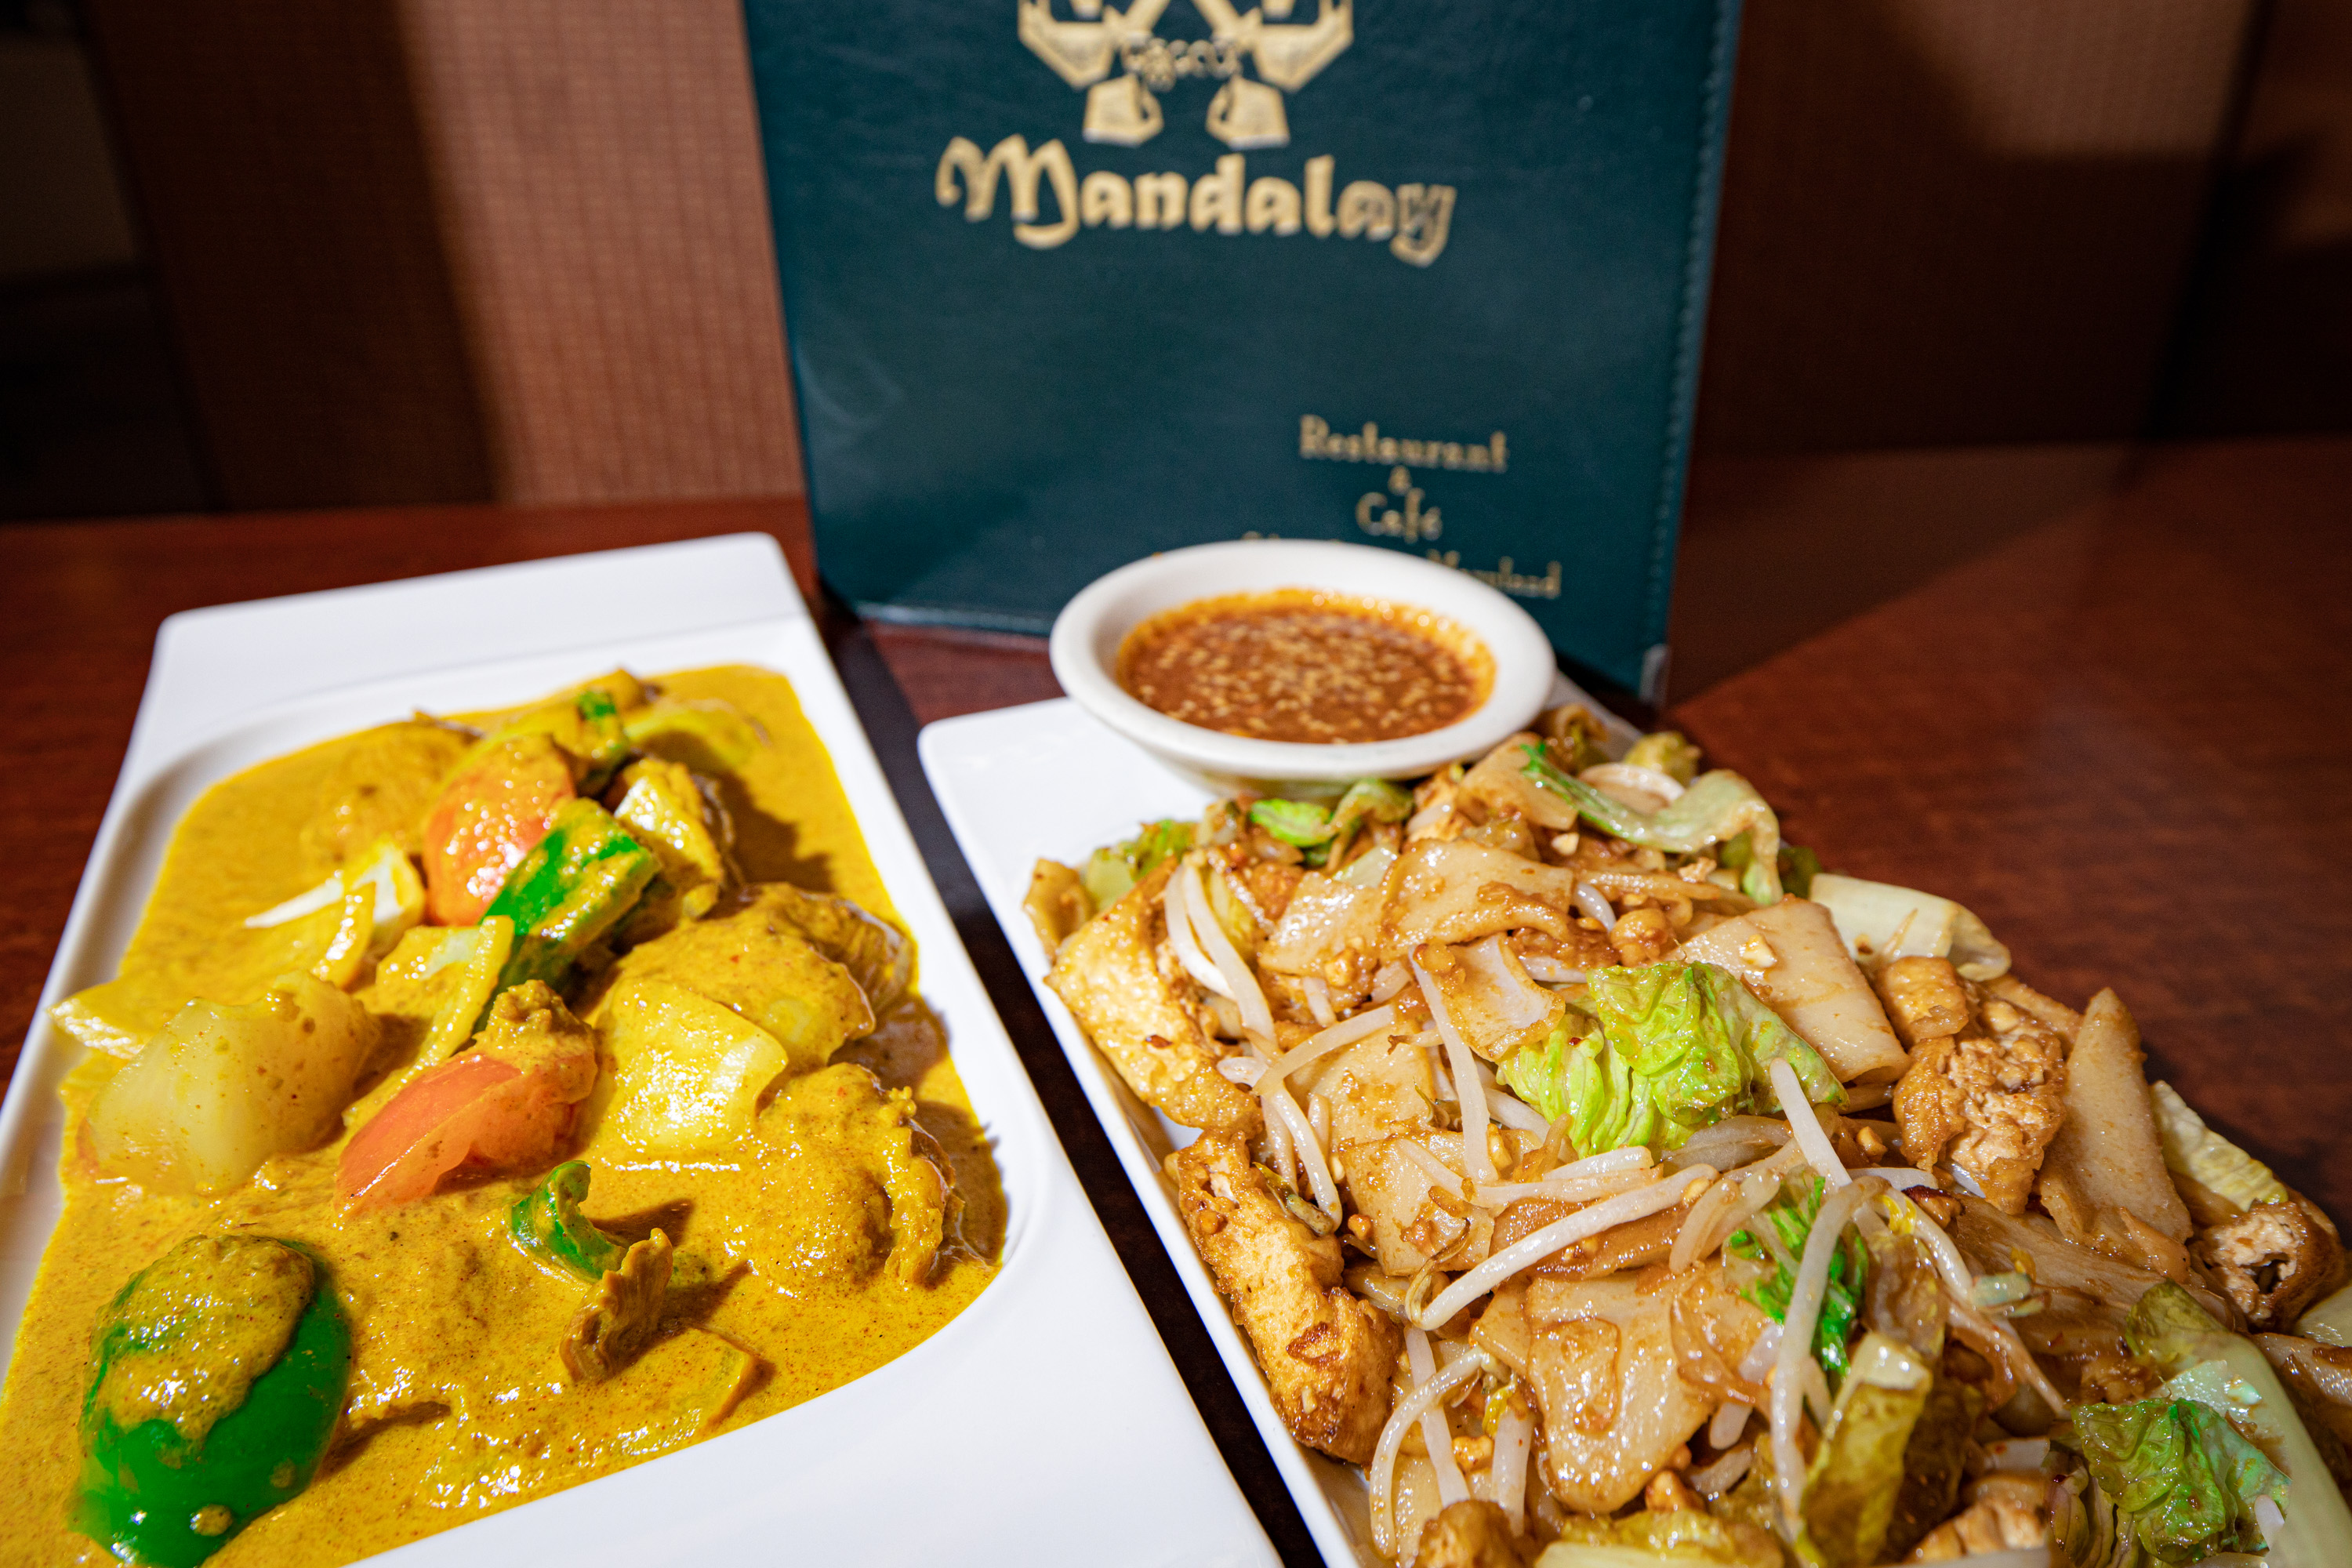 Photo of mandalay restaurant food